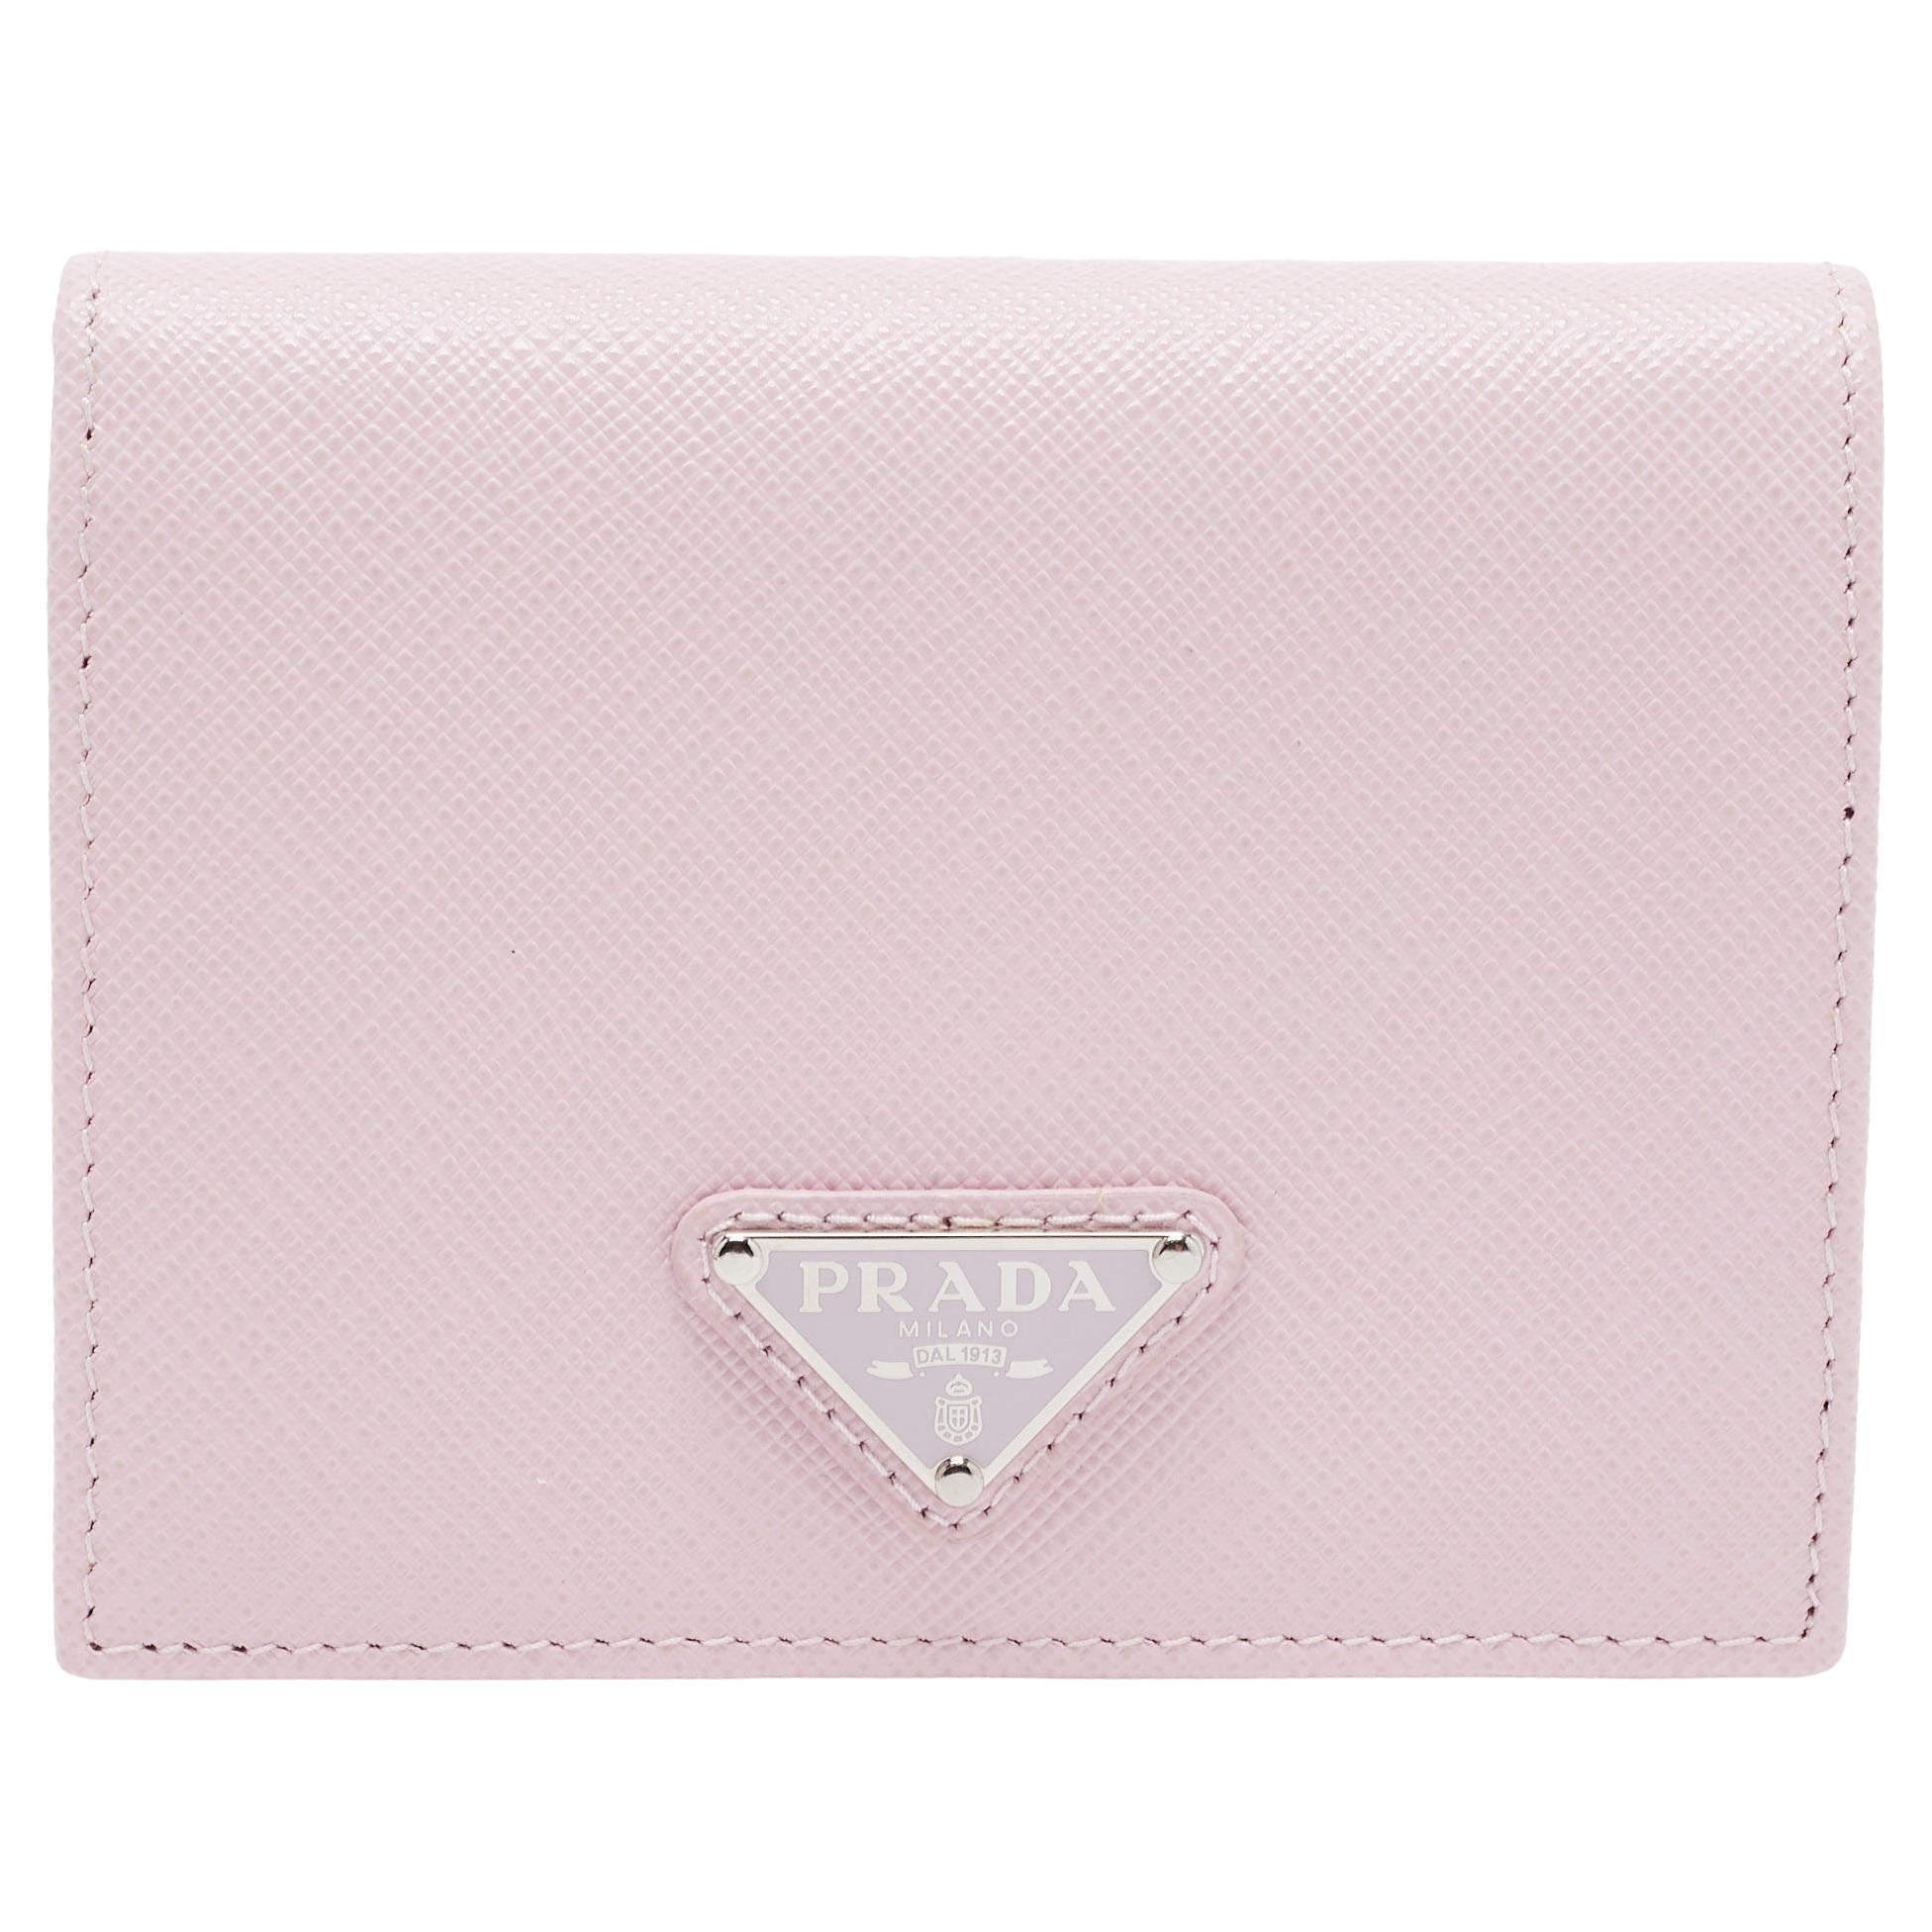 Prada Light Pink Saffiano Metal Leather Bifold Compact Wallet